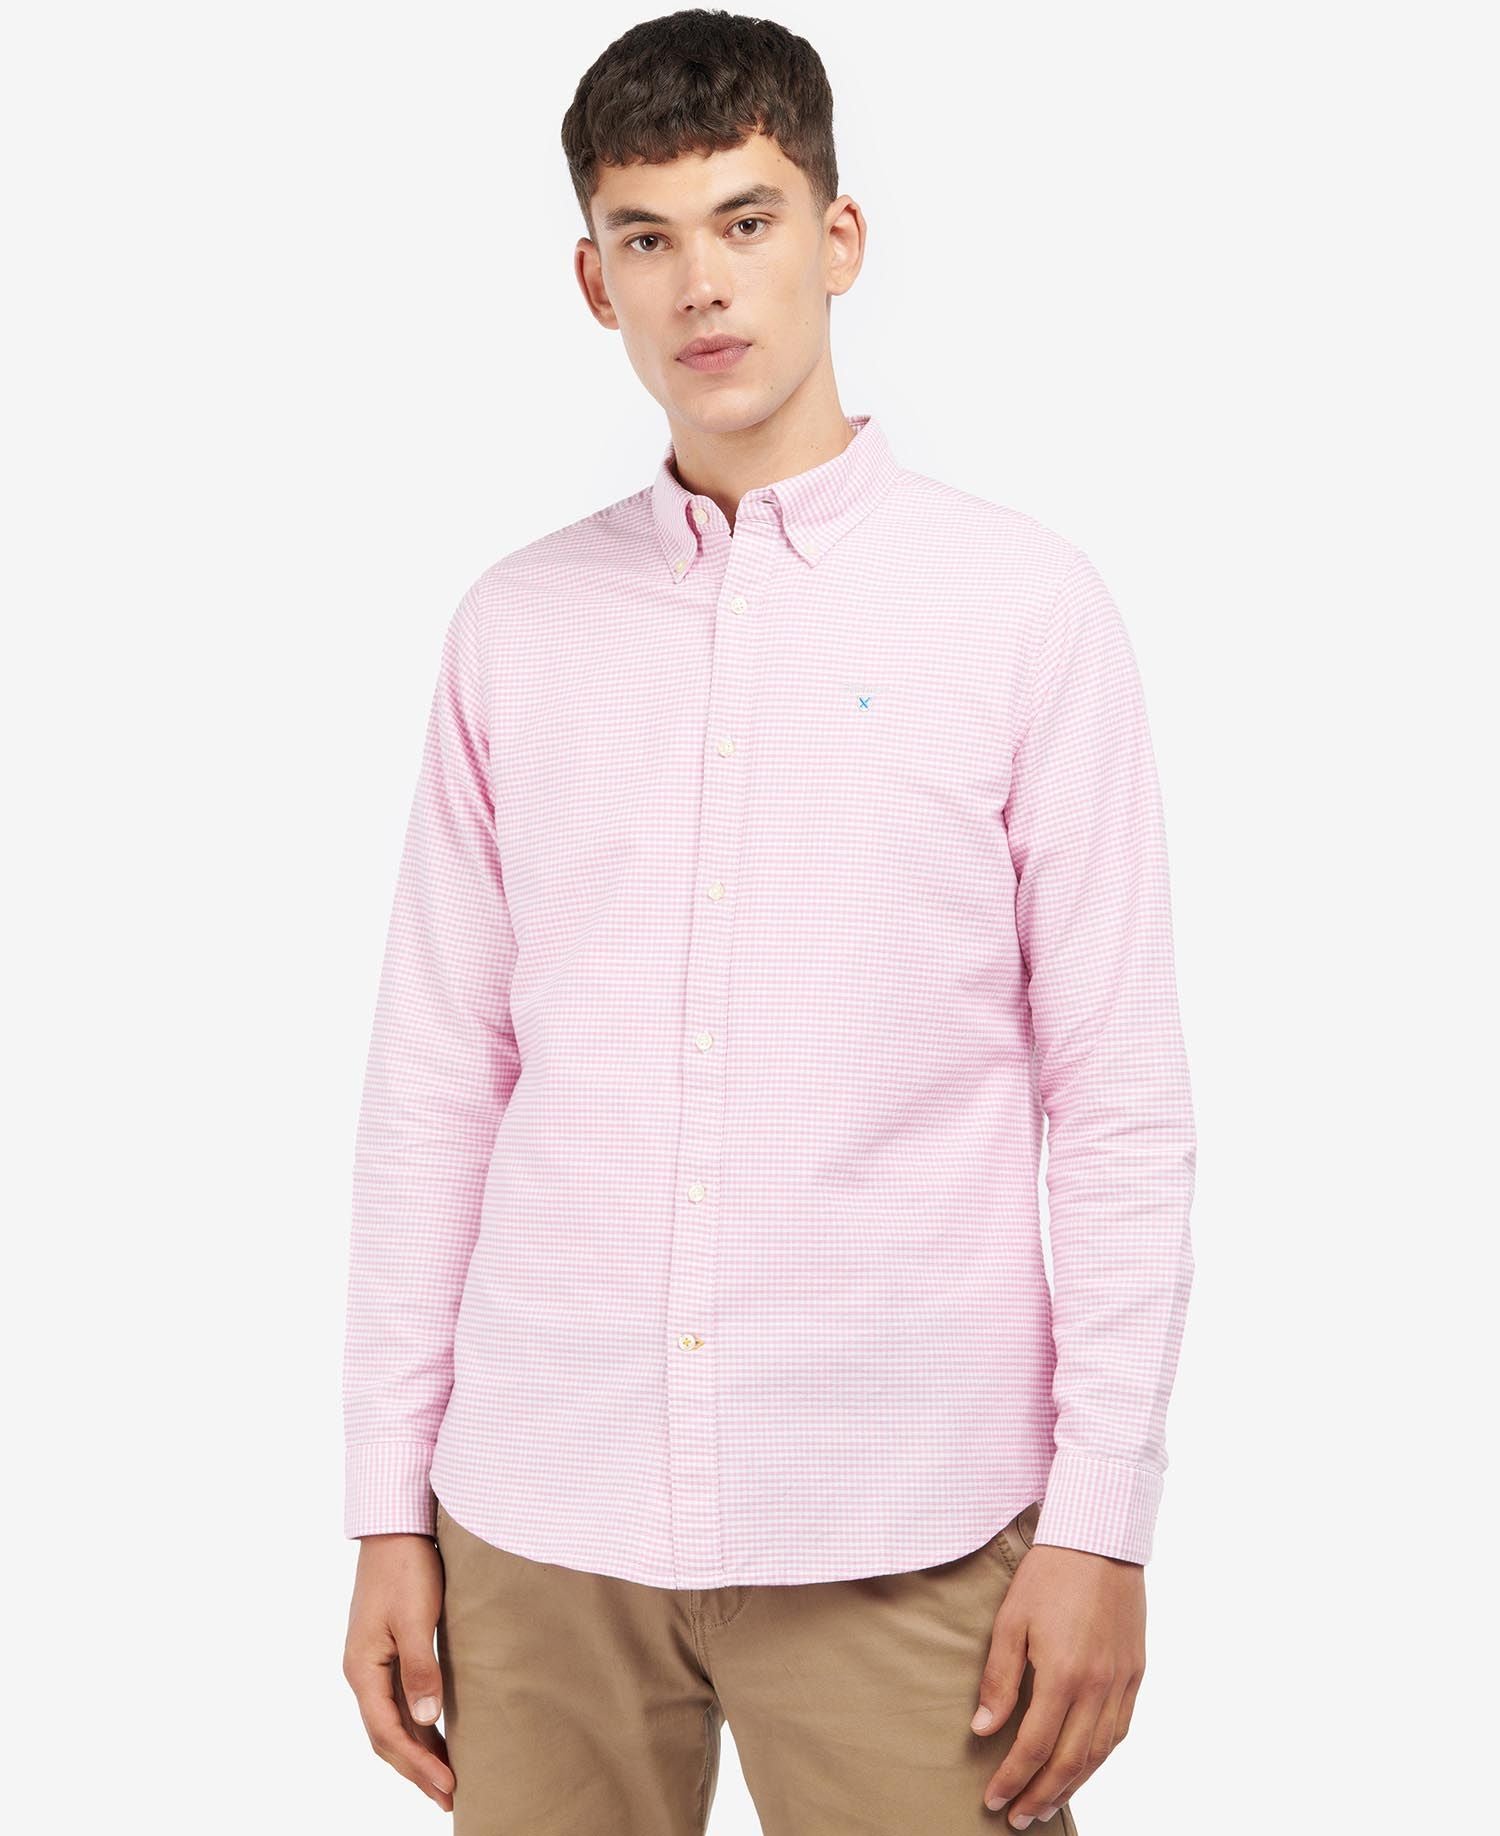 Men's Gingham Oxtown Tailored Shirt - Pink